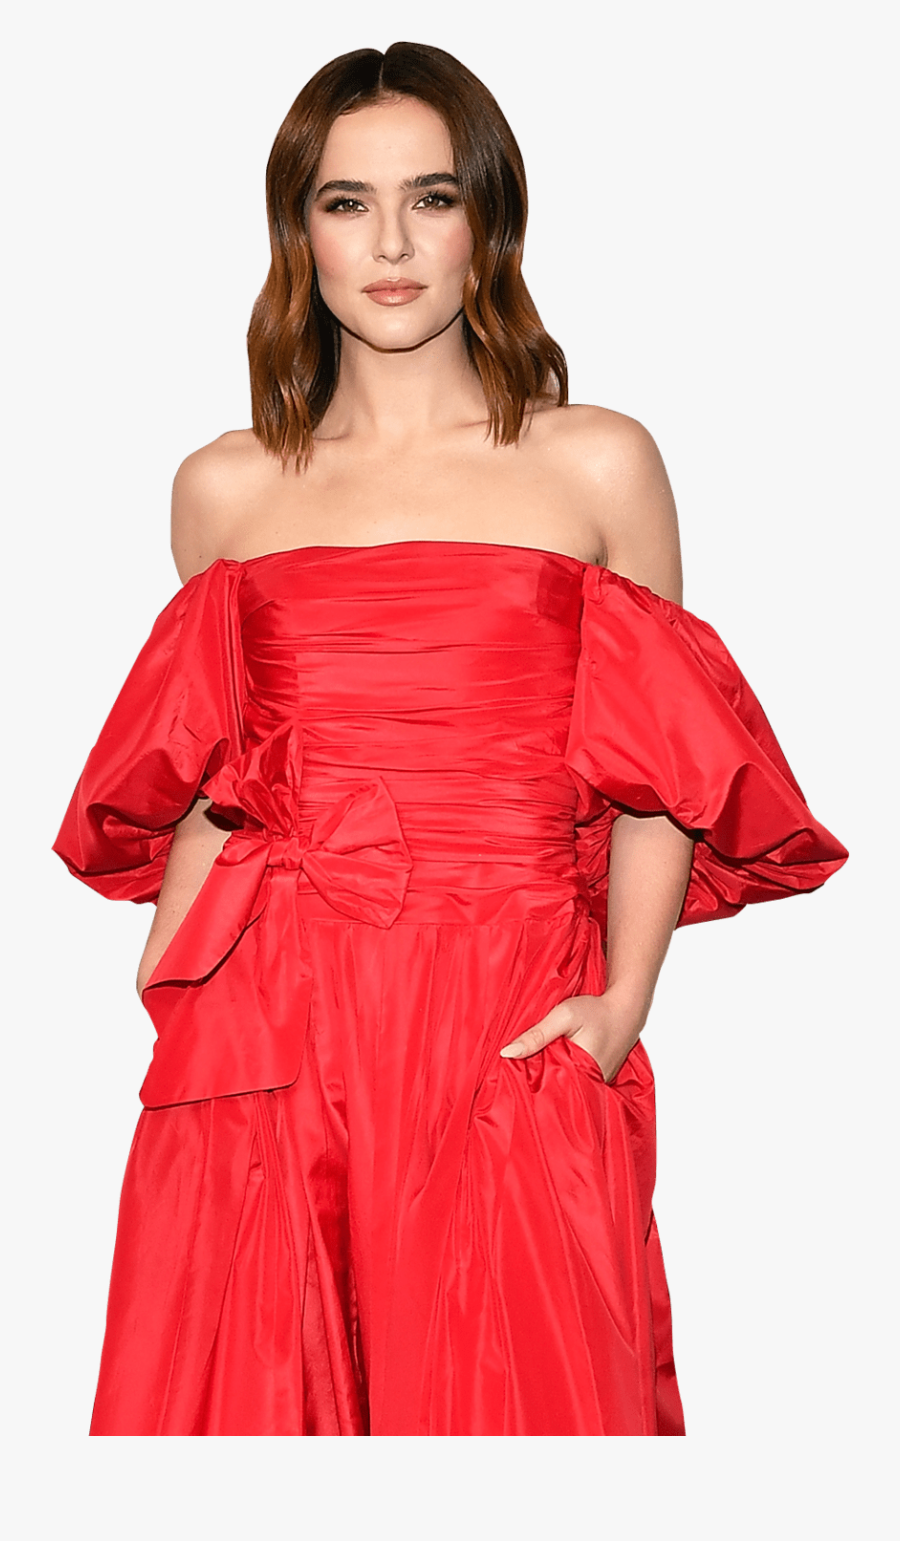 Transparent Sense Of Humor Clipart - Red Off Shoulder Dress Celeb, Transparent Clipart